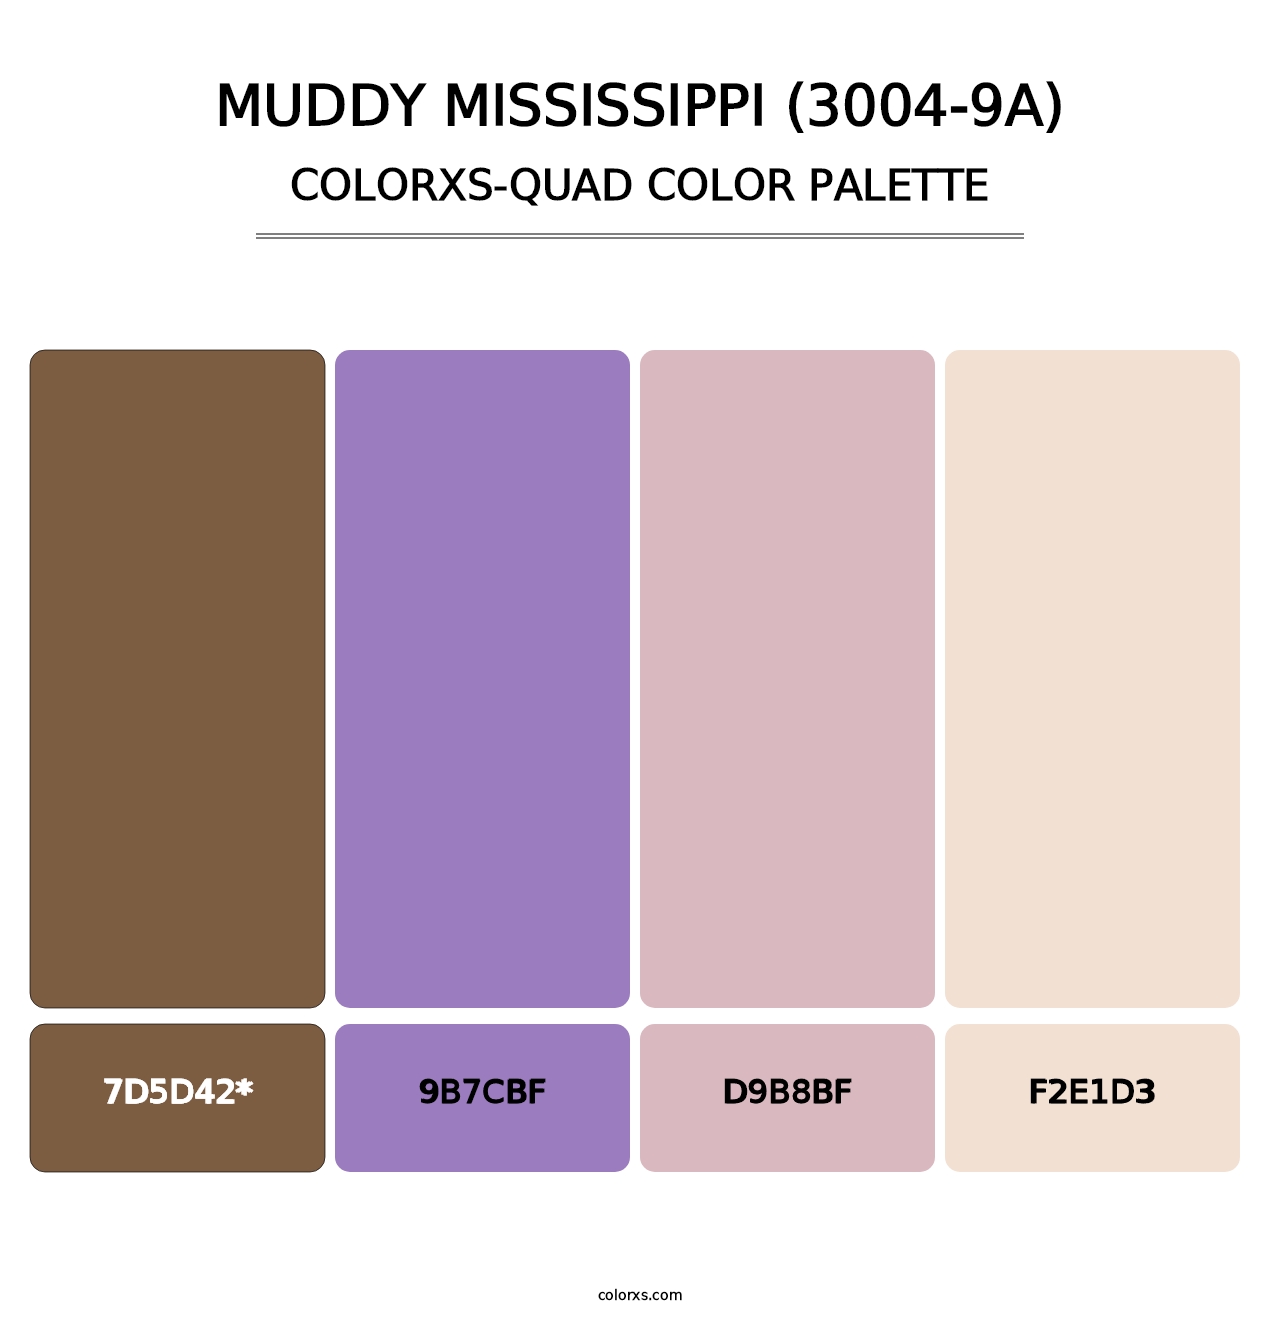 Muddy Mississippi (3004-9A) - Colorxs Quad Palette